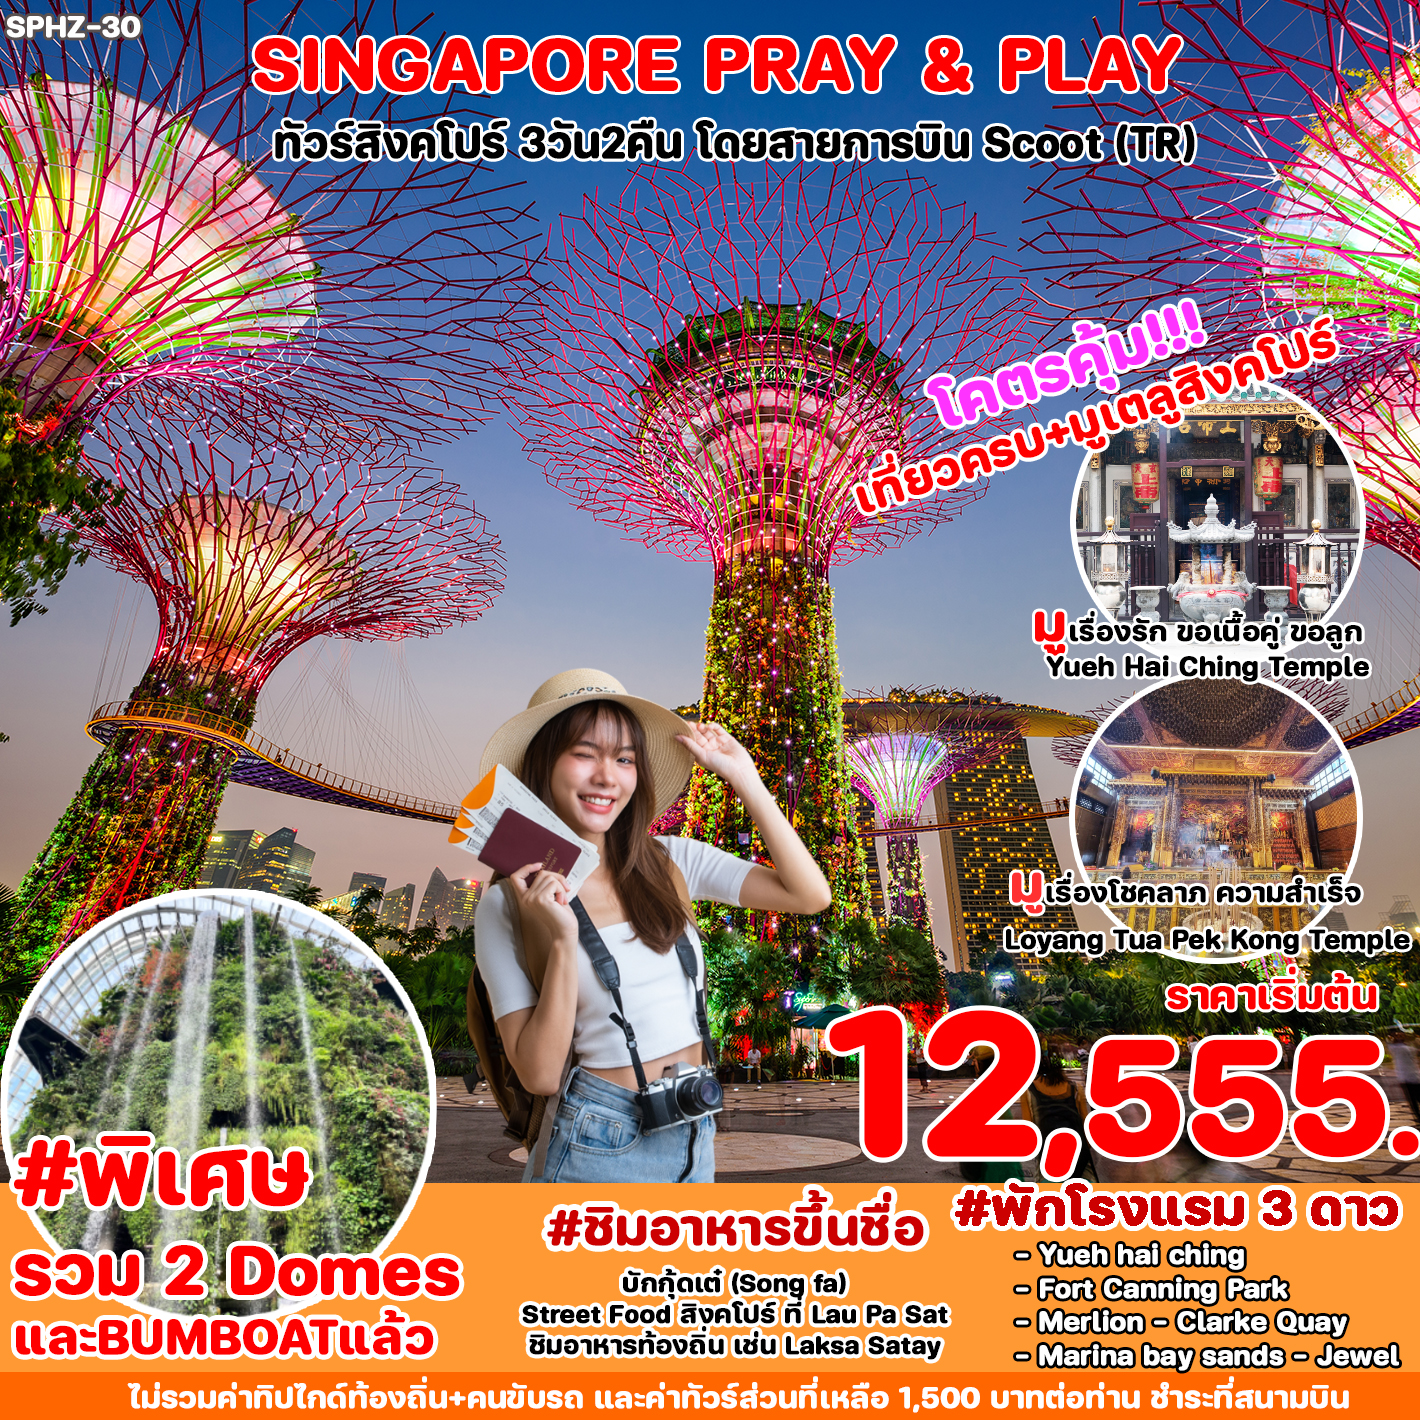 SINGAPORE PRAY&PLAY 3D2N (TR)